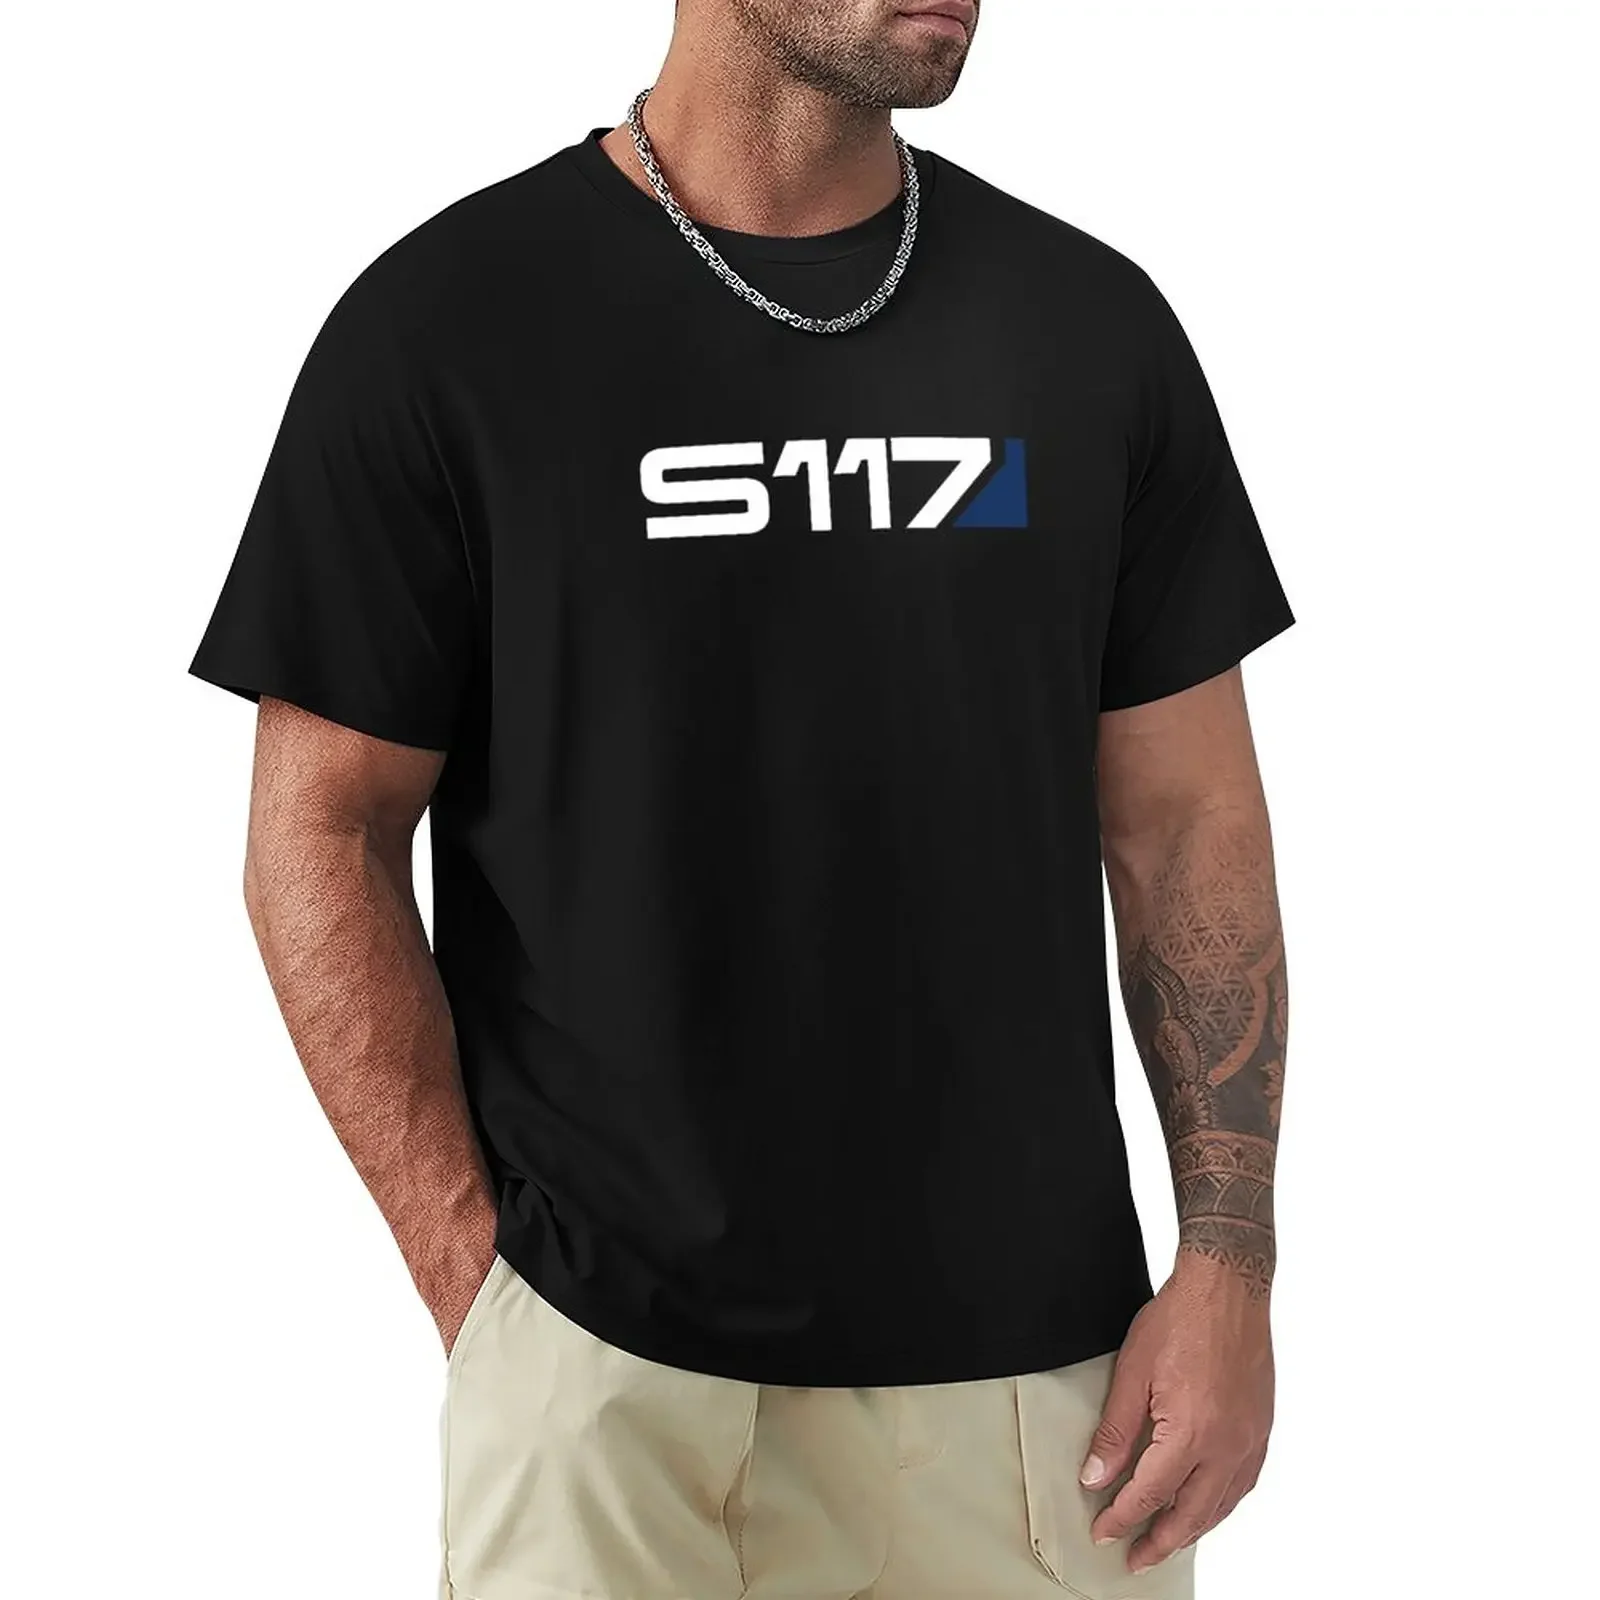 

Sierra-117 Logo N7 CC SPECTRE Variant T-Shirt oversized t shirts boys animal print shirt men clothes